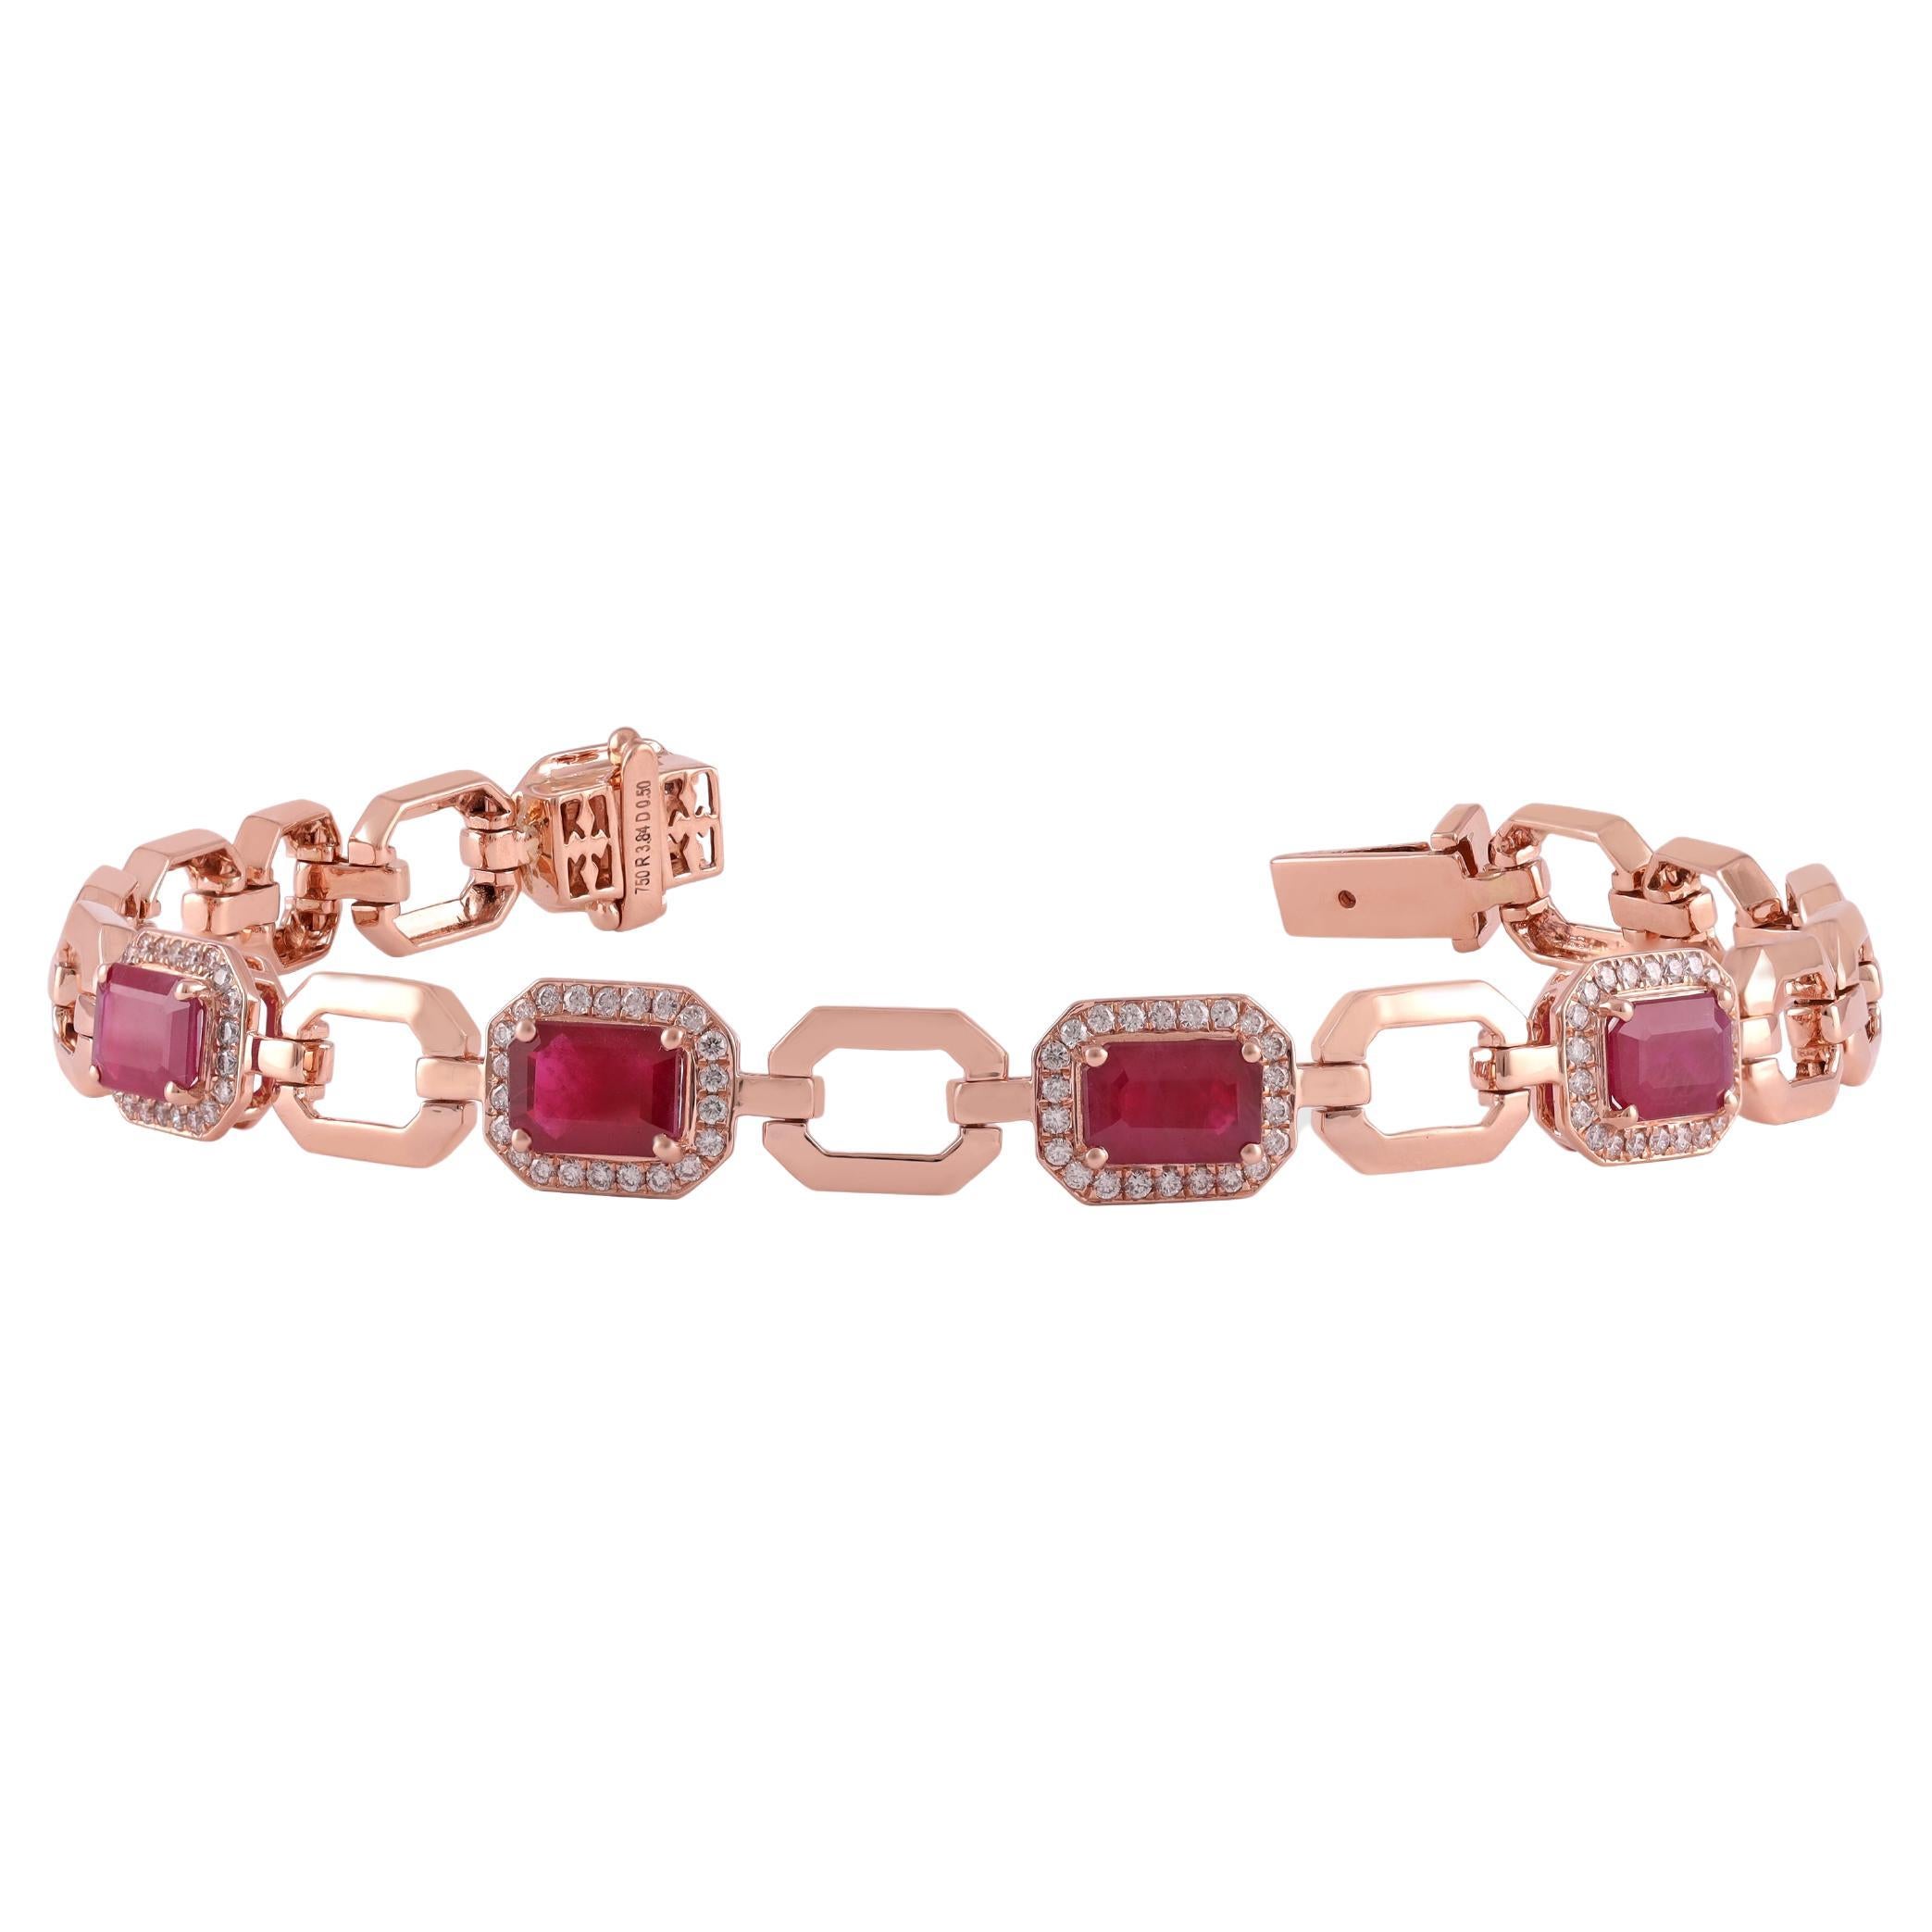 3.84 Carat Ruby and Diamond bracelet in 18k Rose Gold